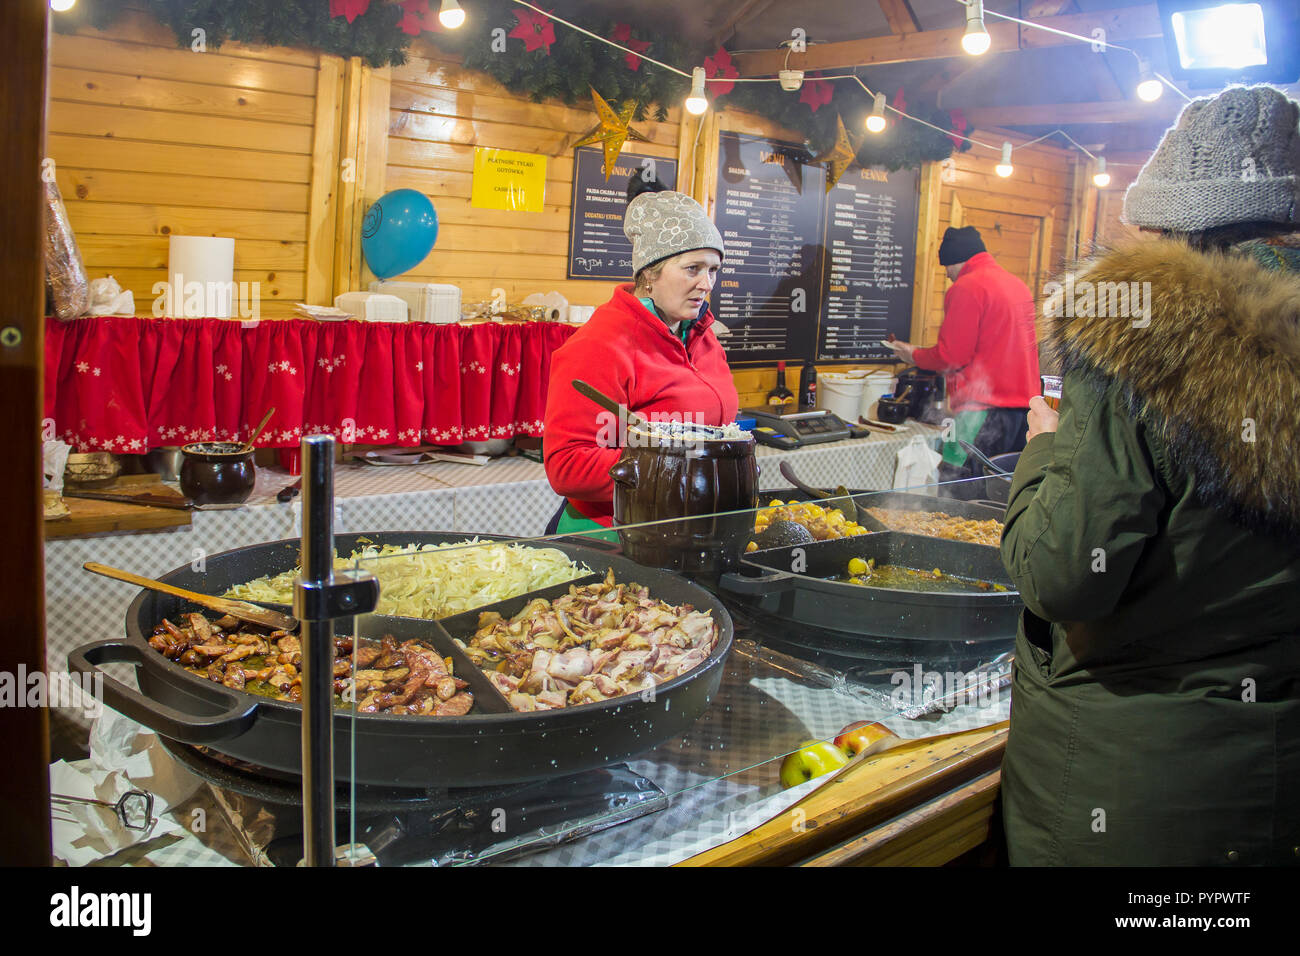 WROCLAW, POLAND - DECEMBER 7, 2017: Woman sells traditional polish food on winter Christmas market Stock Photo